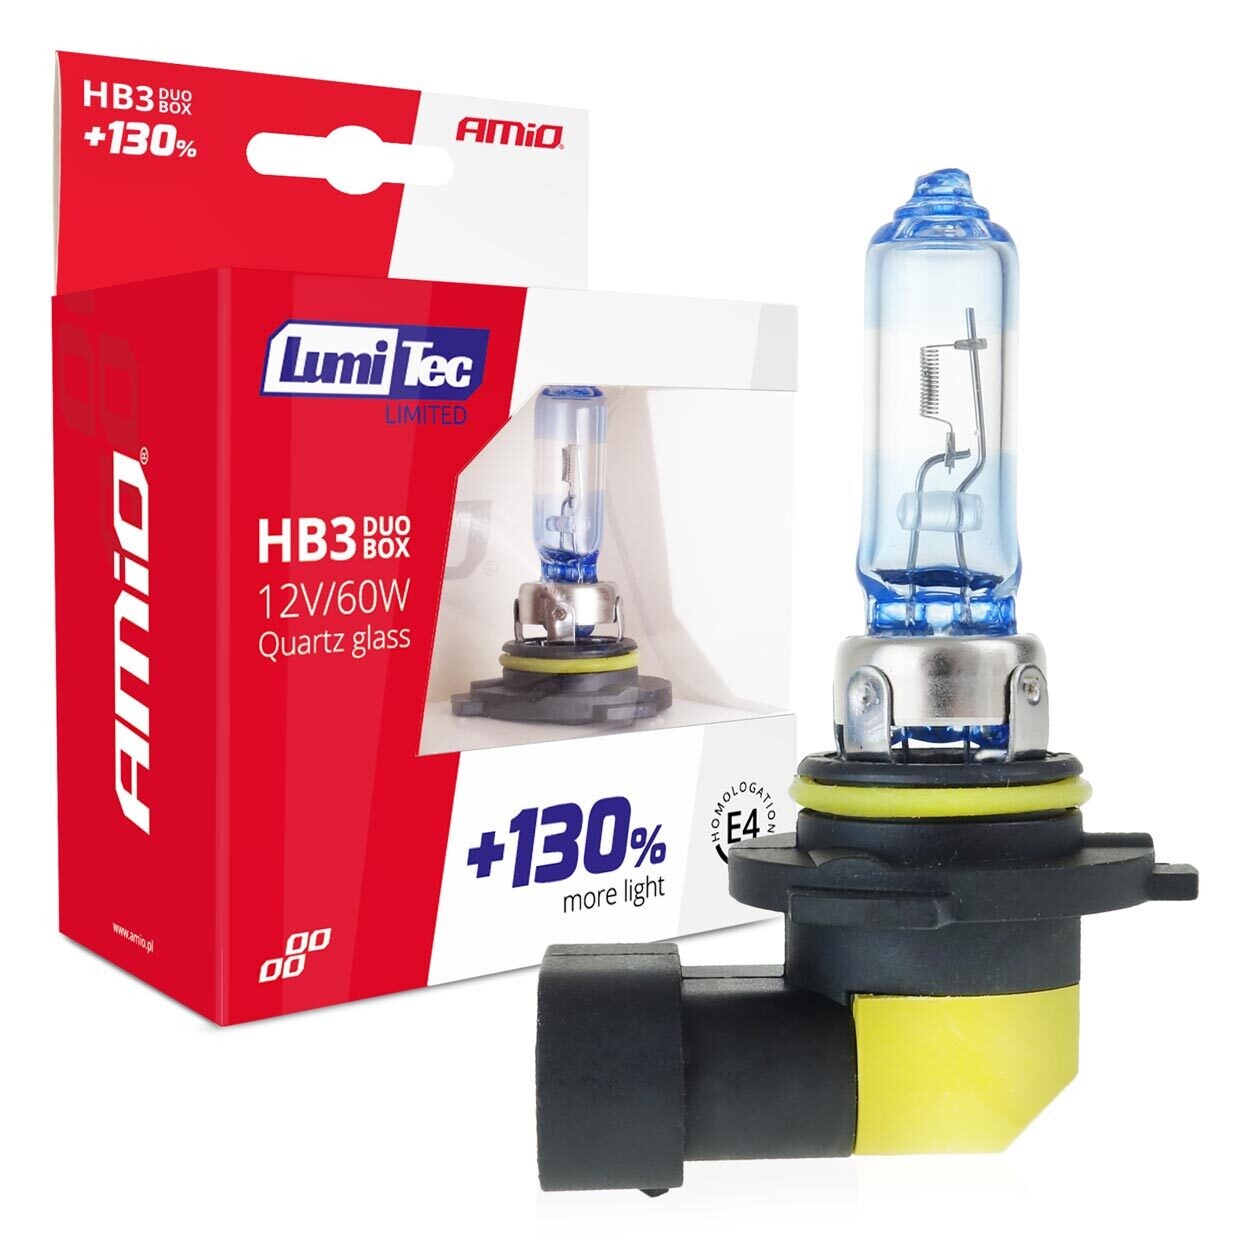 Halogen bulbs HB3 12V 60W LumiTec LIMITED +130% DUO